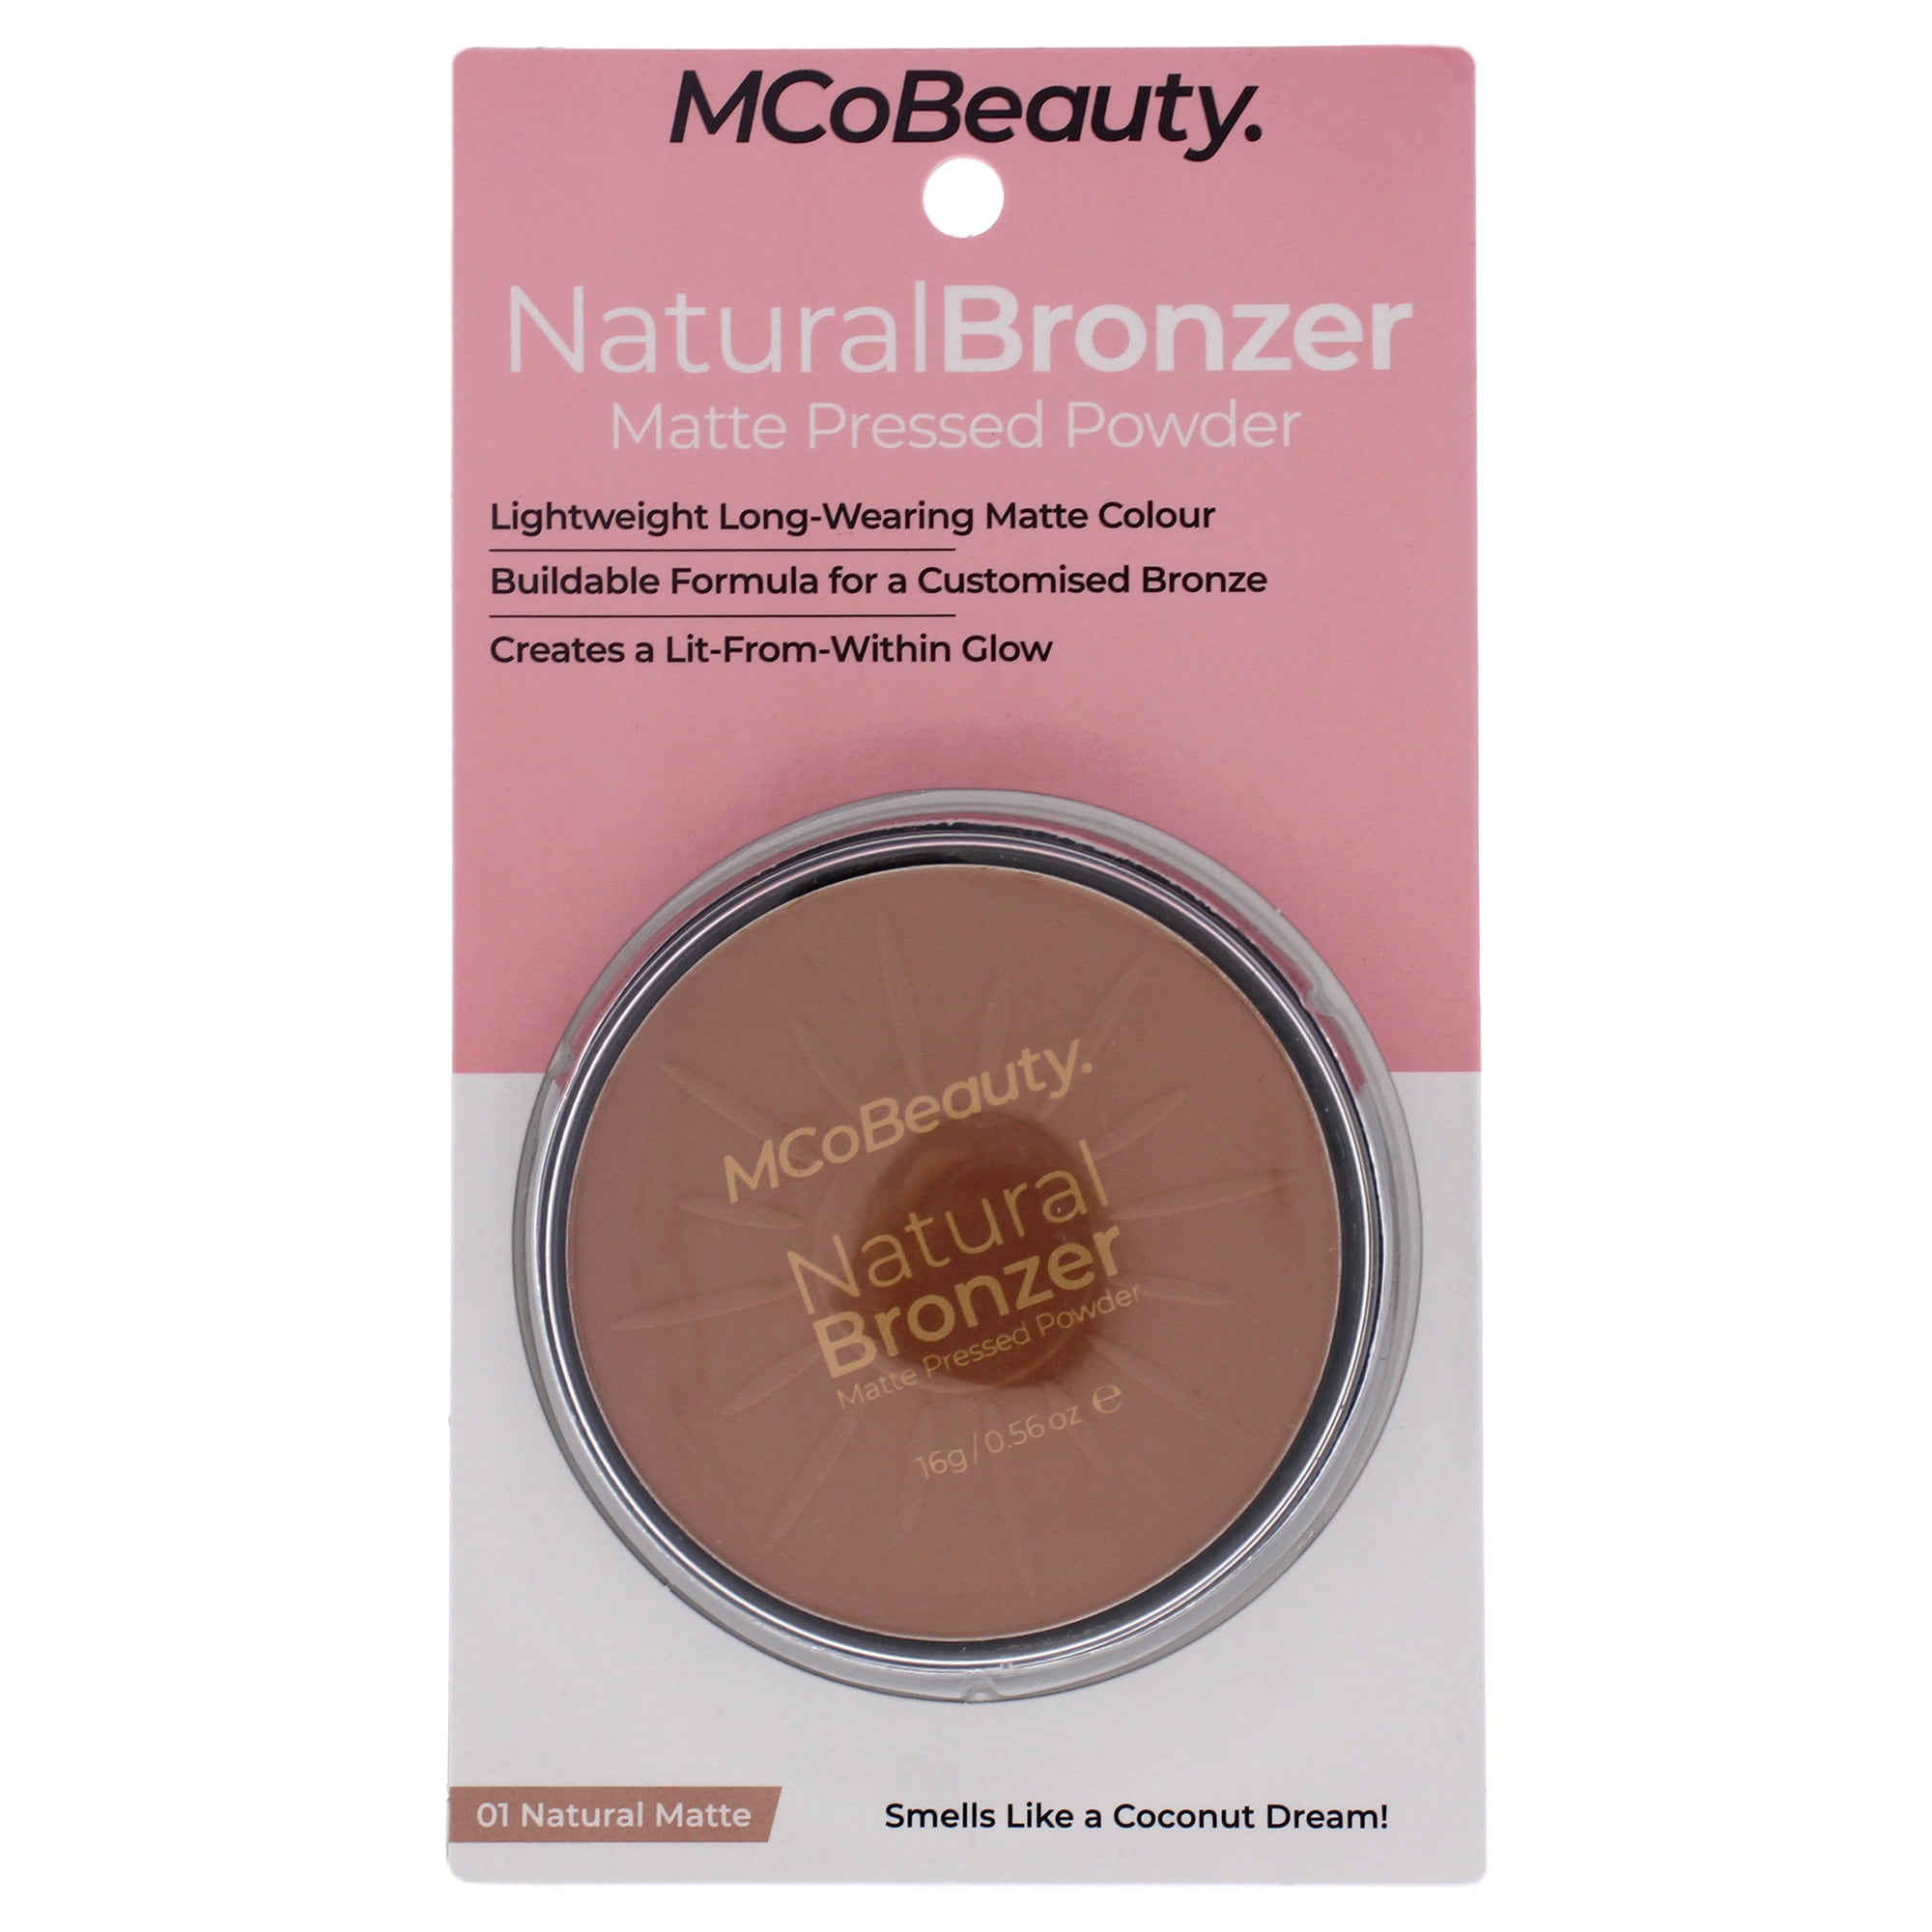 Klappe ballade luge MCoBeauty Natural Bronzer Matte Pressed Powder, 01 Natural Matte, 0.56 oz -  Walmart.com